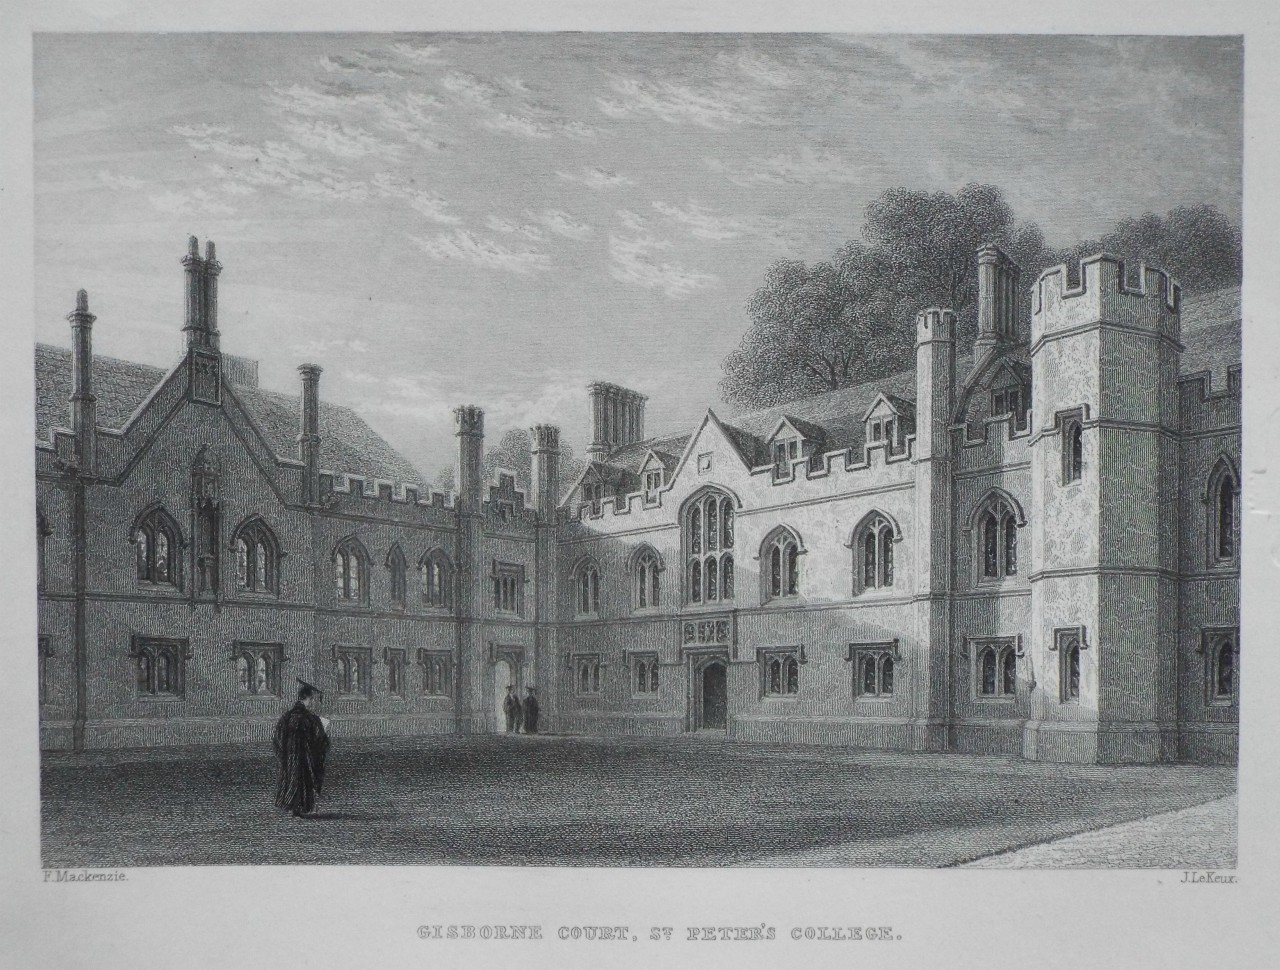 Print - Gisborne Court, St. Peter's College. - Le